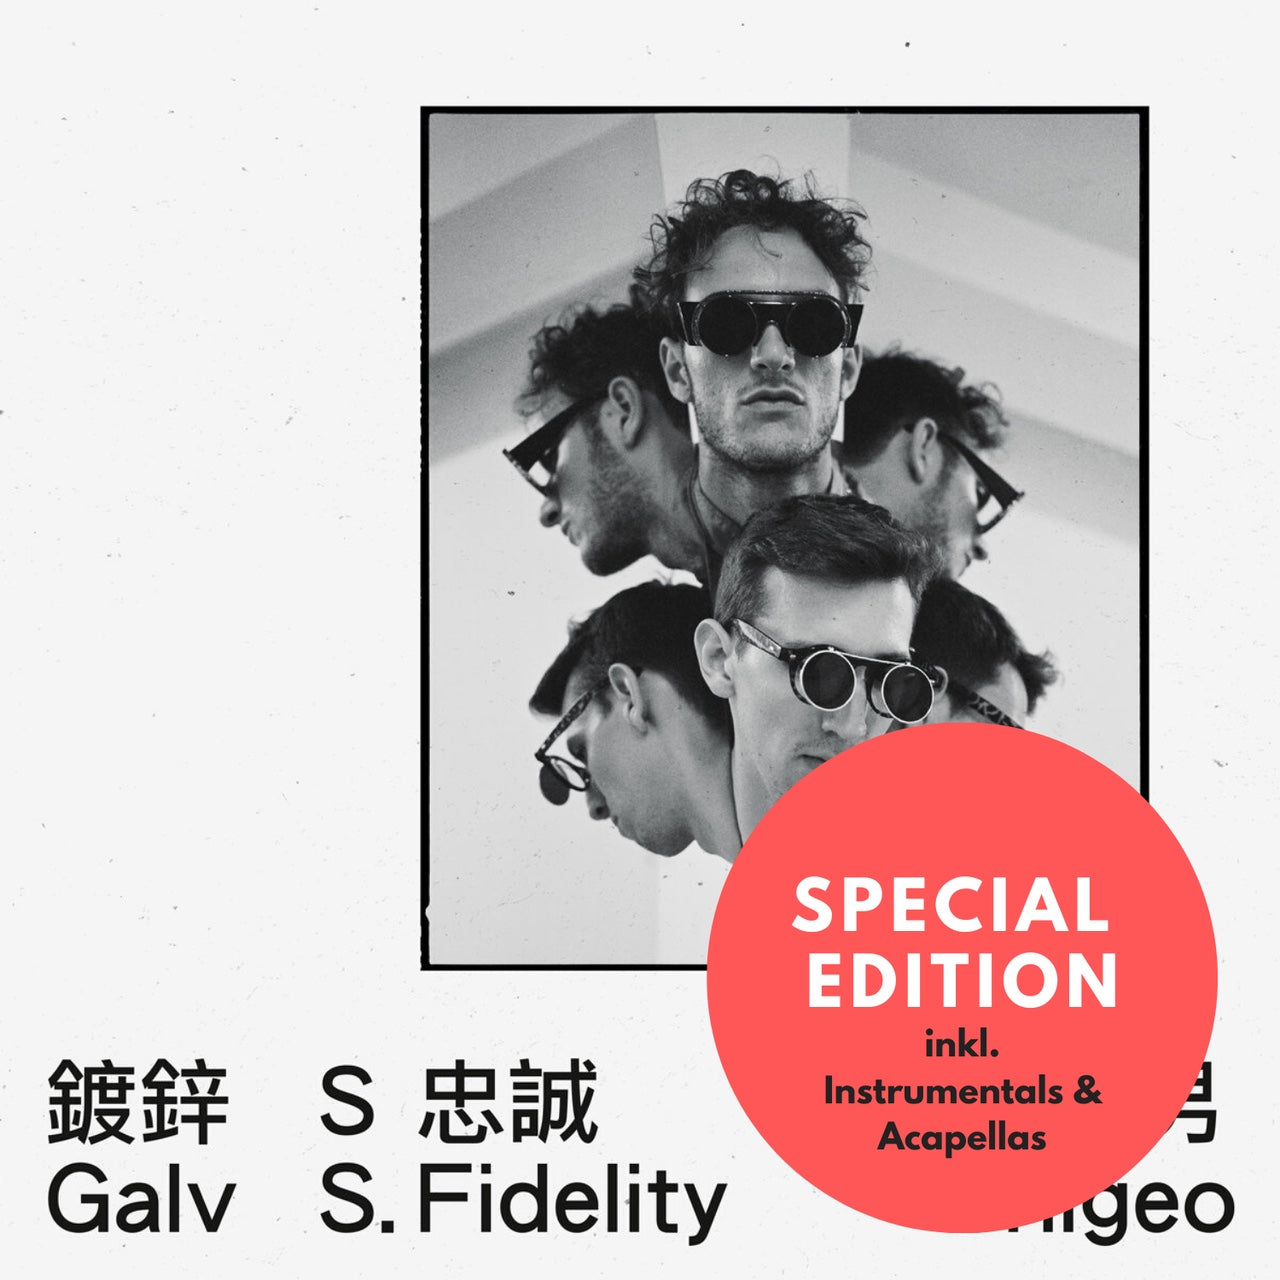 Shigeo (Special Edition inkl. Acapellas & Instrumentals)